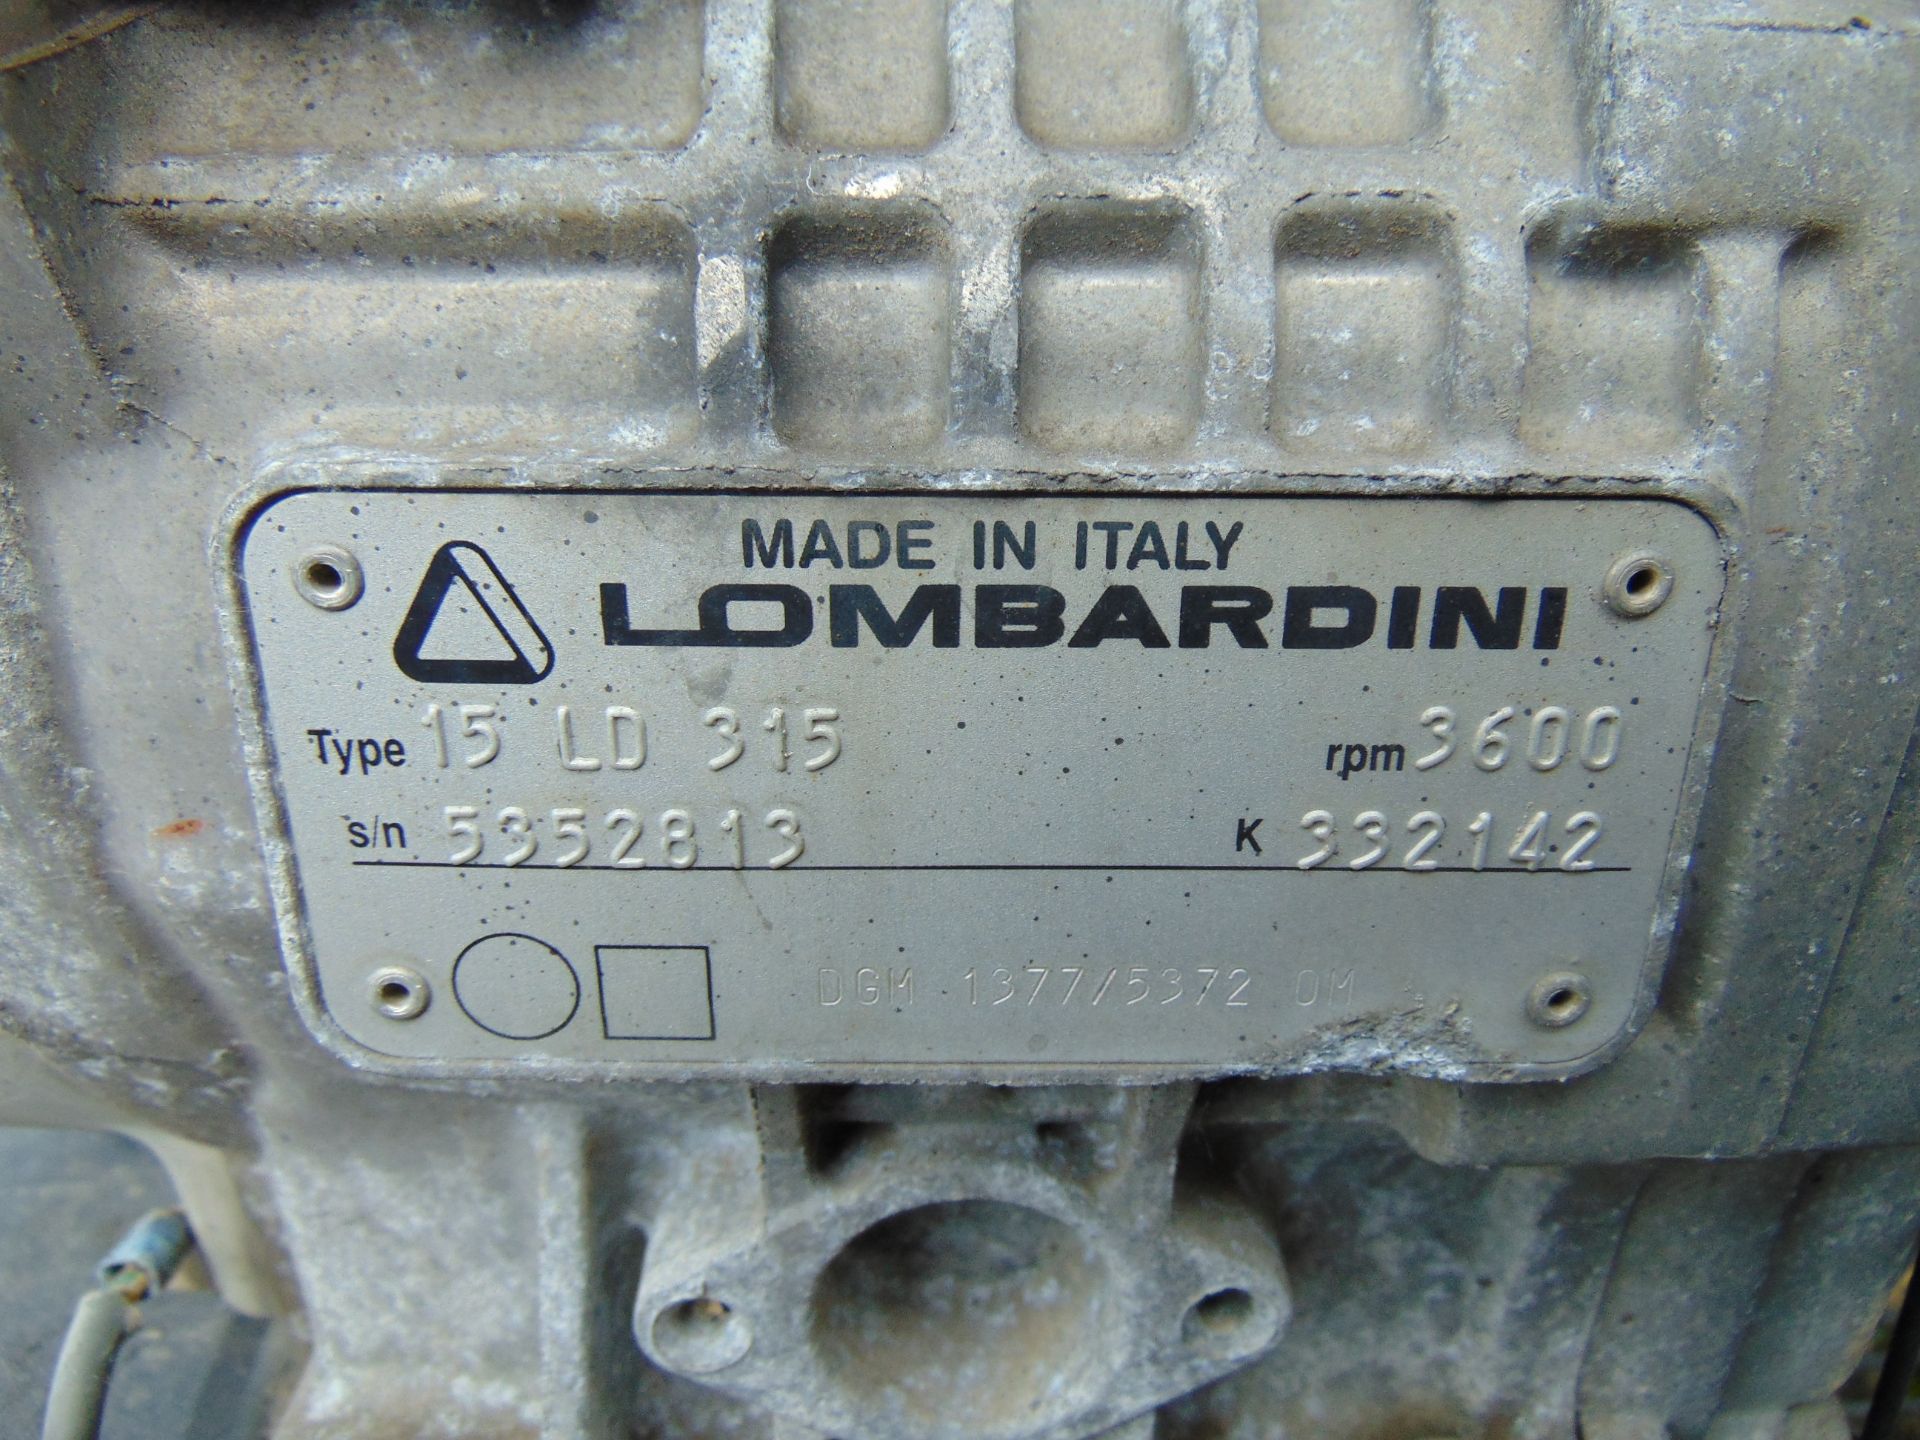 Lombardini 15LD315 Diesel Engine Compressor Assy - Image 5 of 5